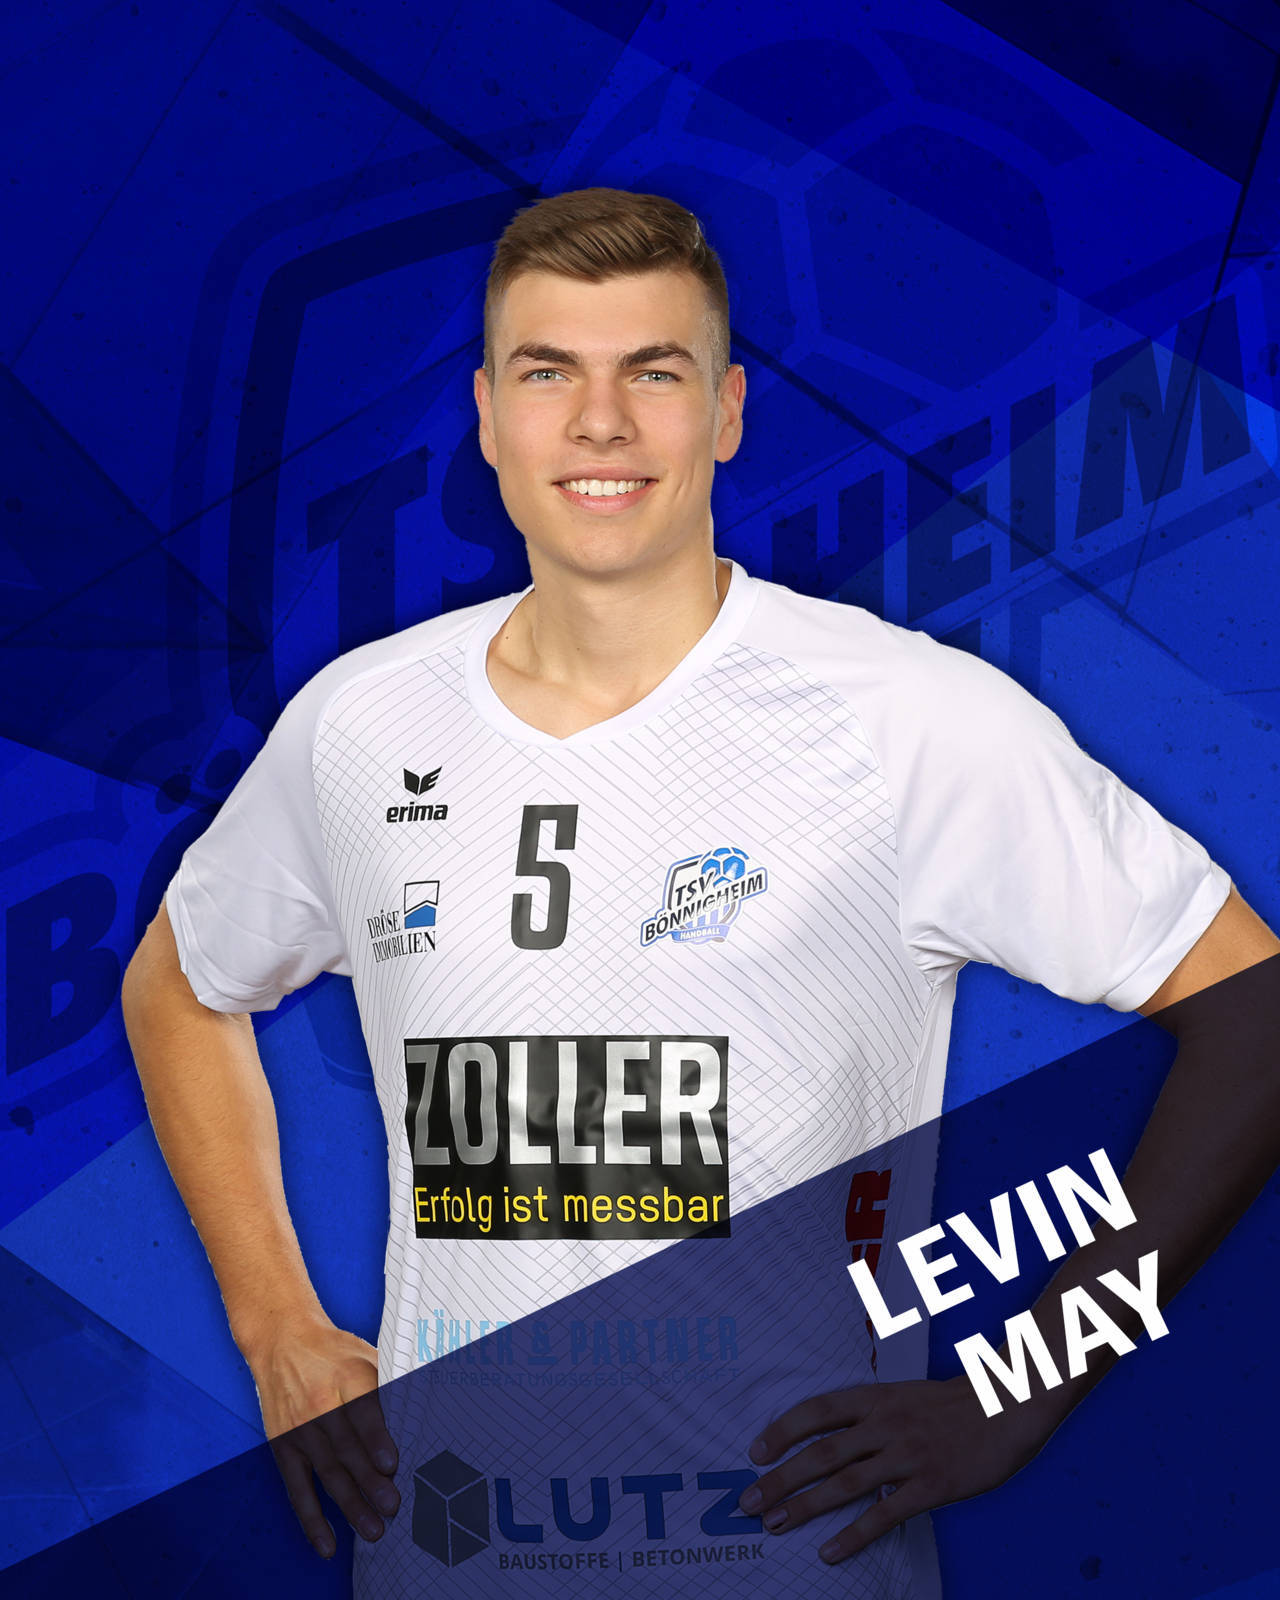 may, levin